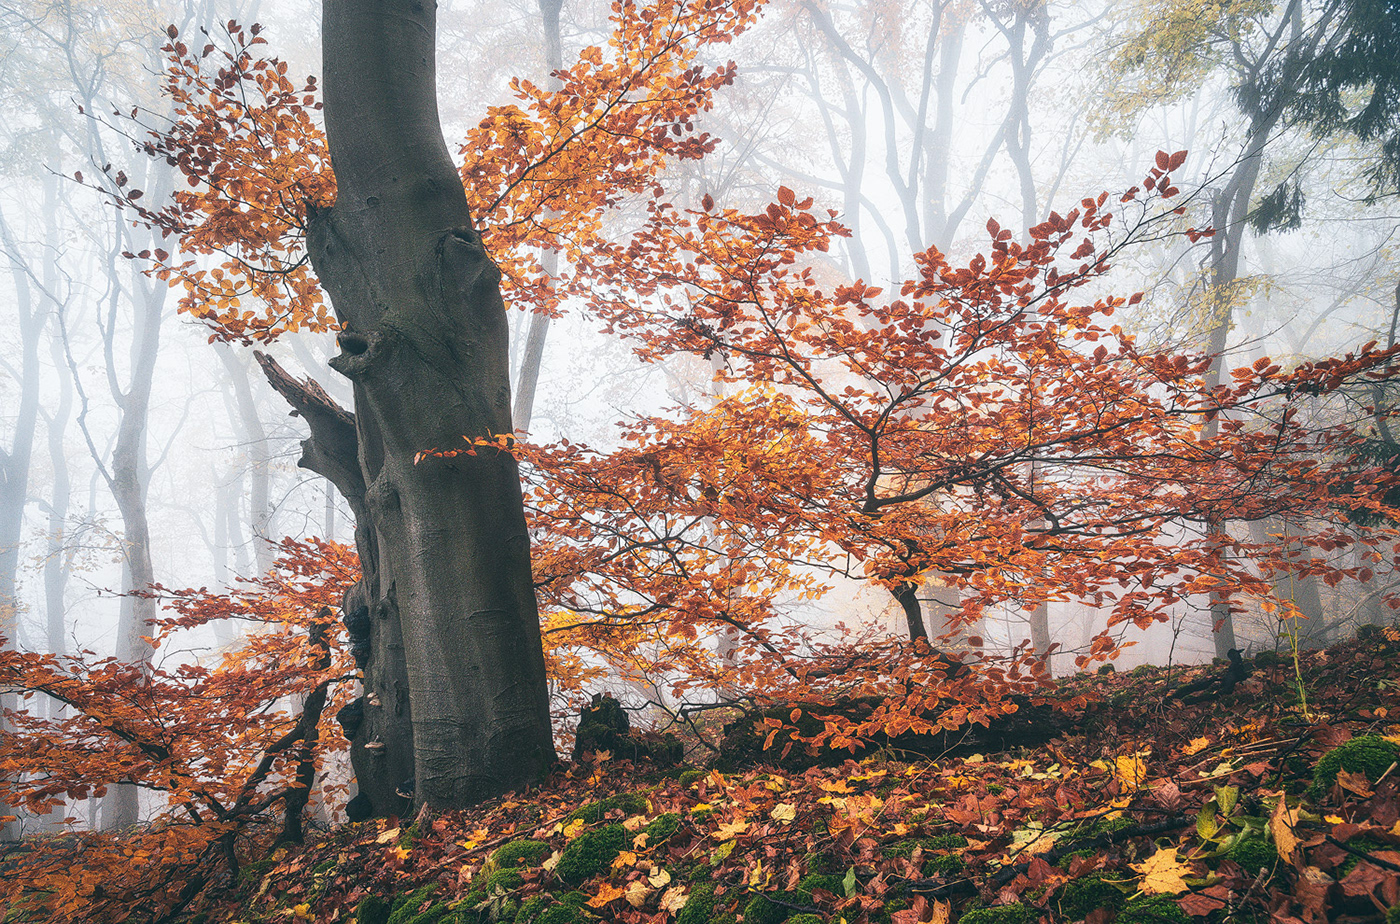 Landscape forest wood trees autumn fog mist mood Gleichberg Fall